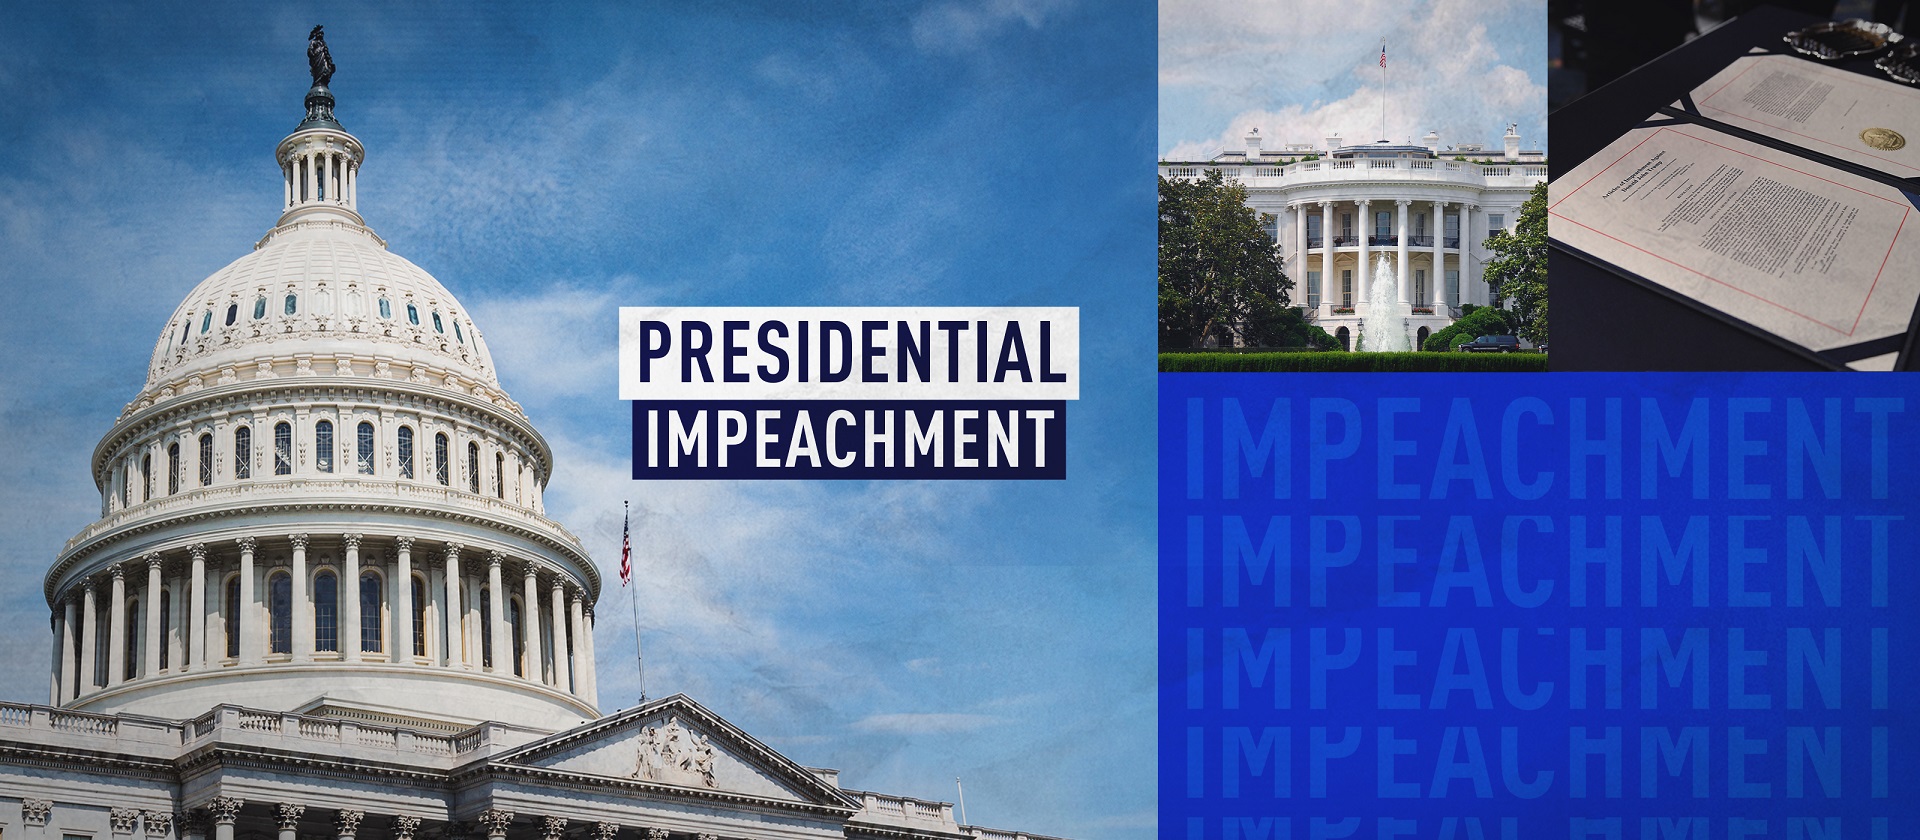 The Heat: Trump’s impeachment process